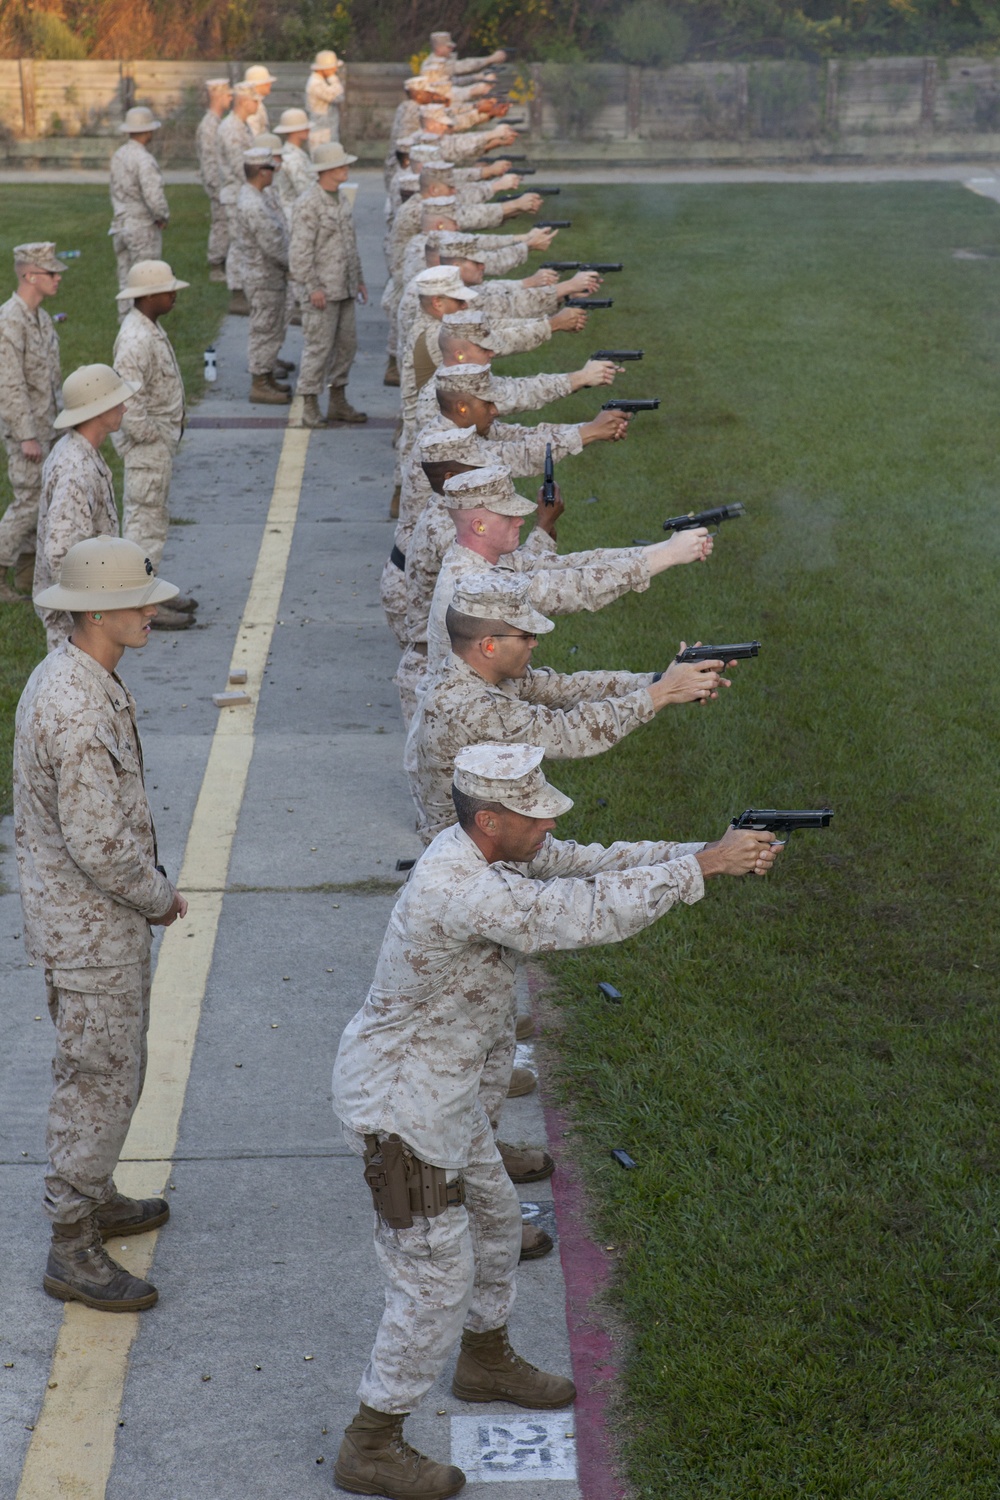 Cherry Point Implements Combat Pistol Program